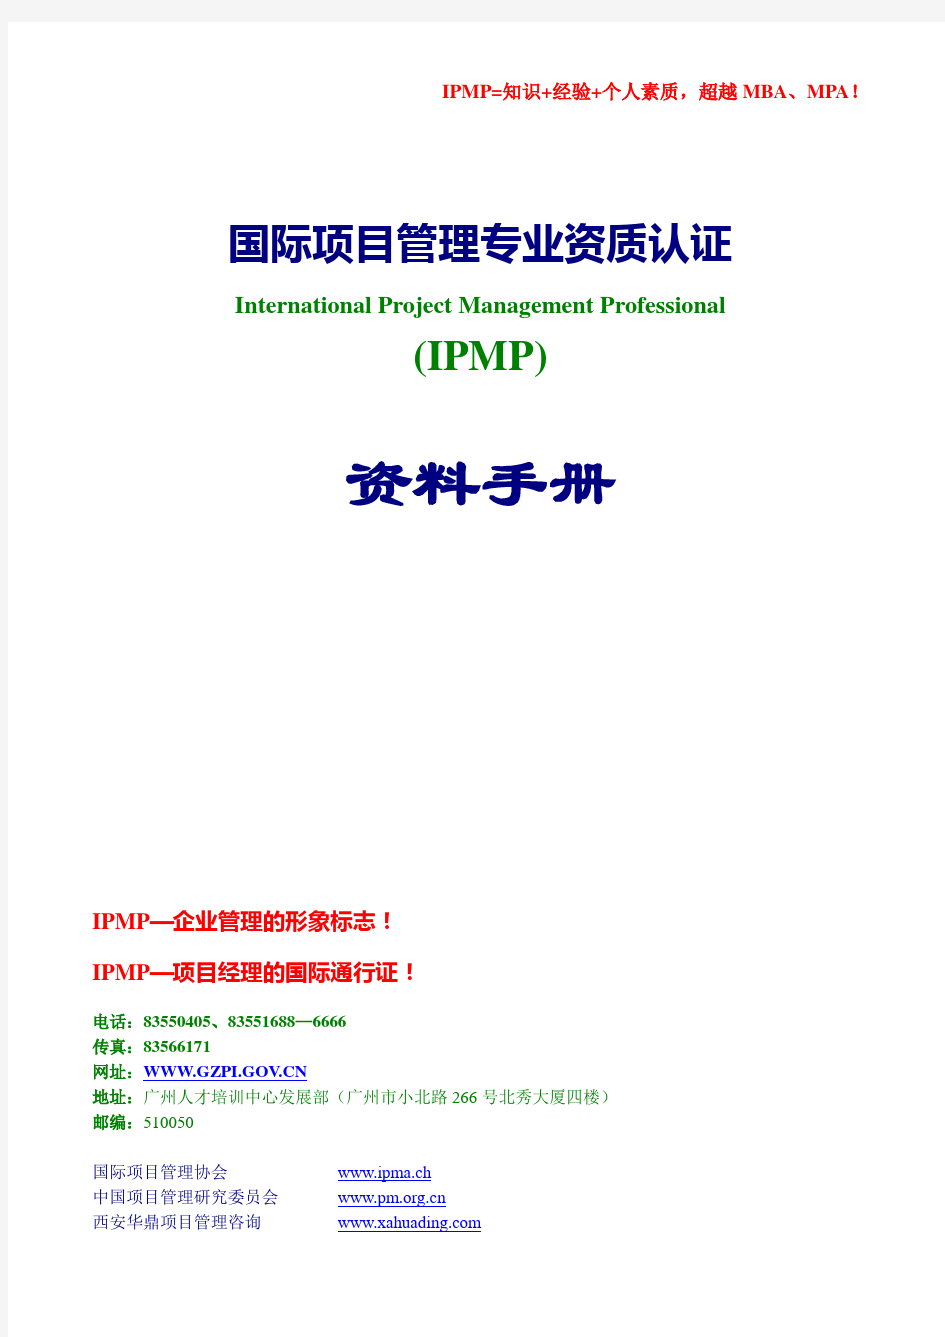 IPMP详细介绍